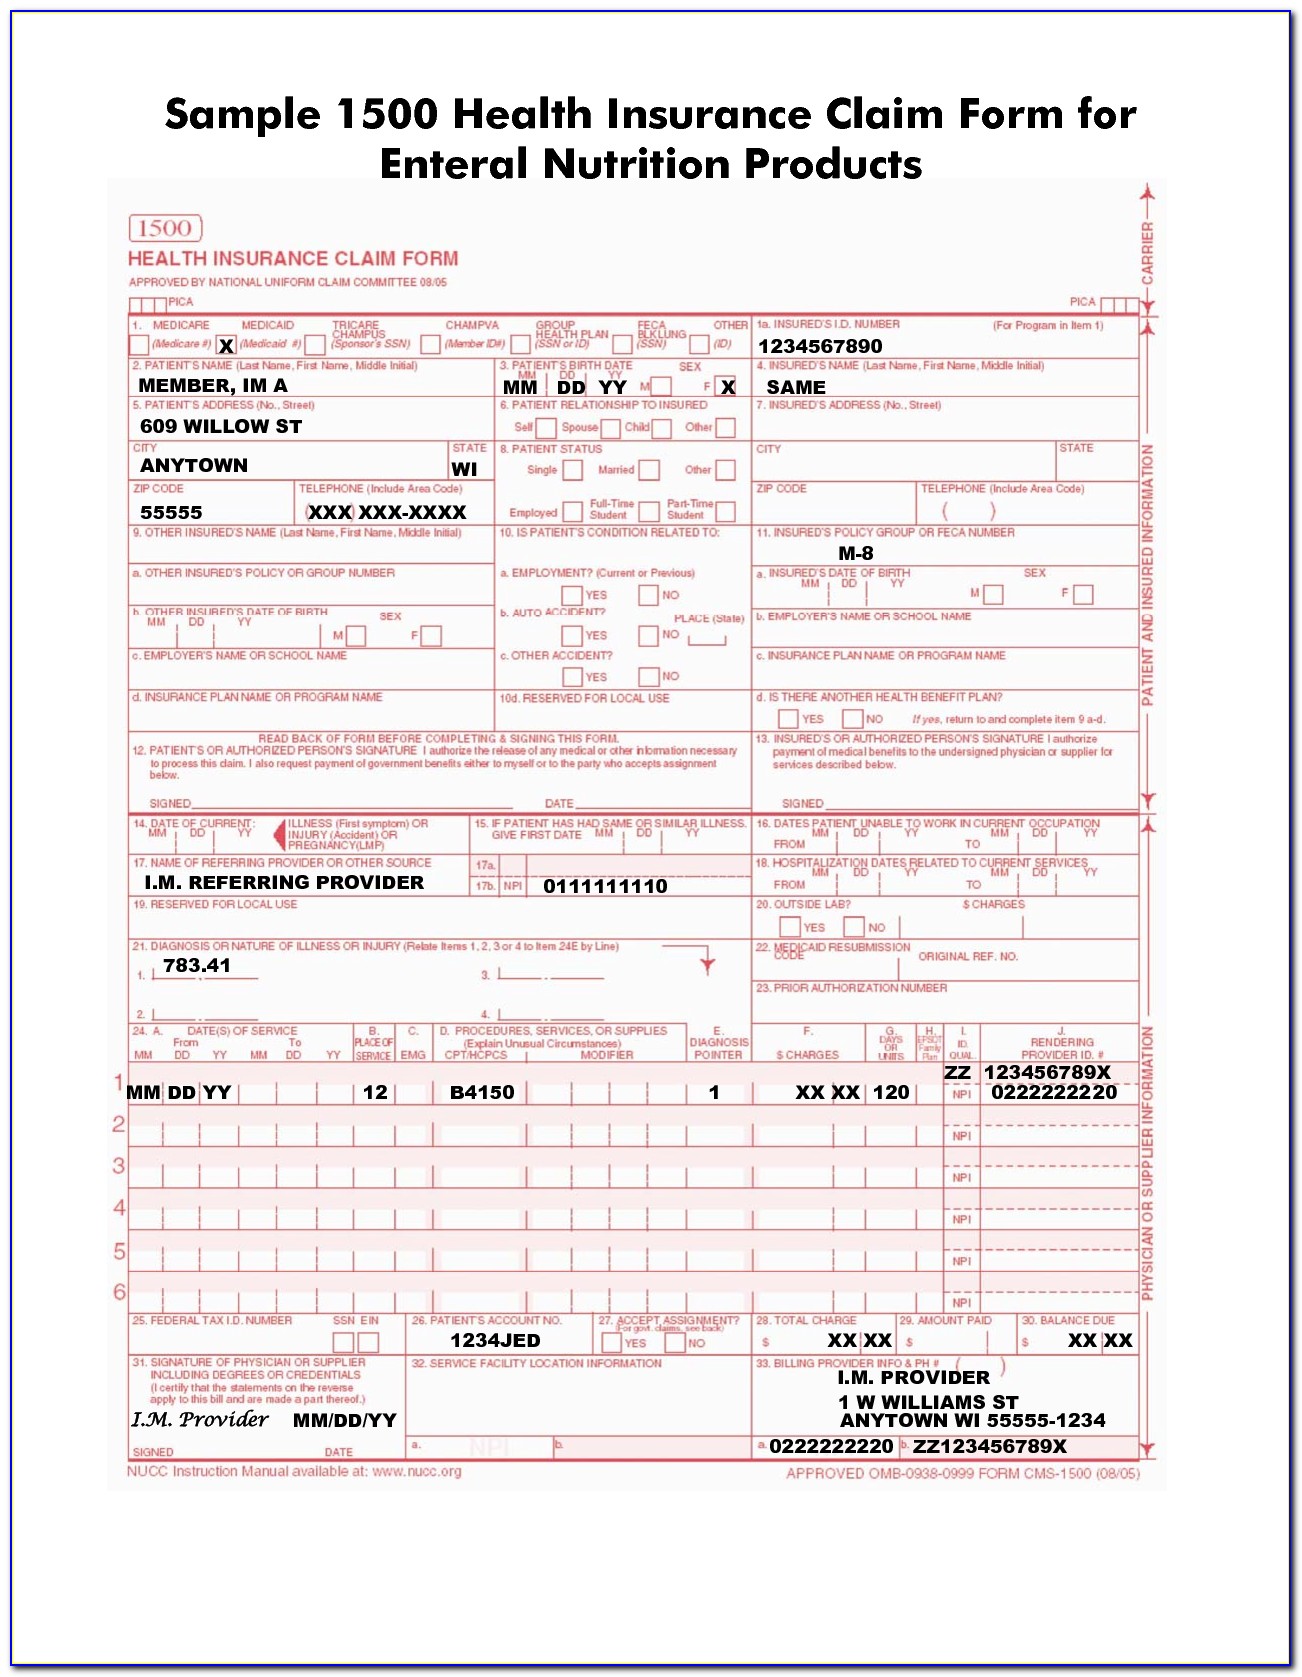 hcfa-1500-claim-form-envelopes-cms-1500-hcfa-claim-forms-new-version-02